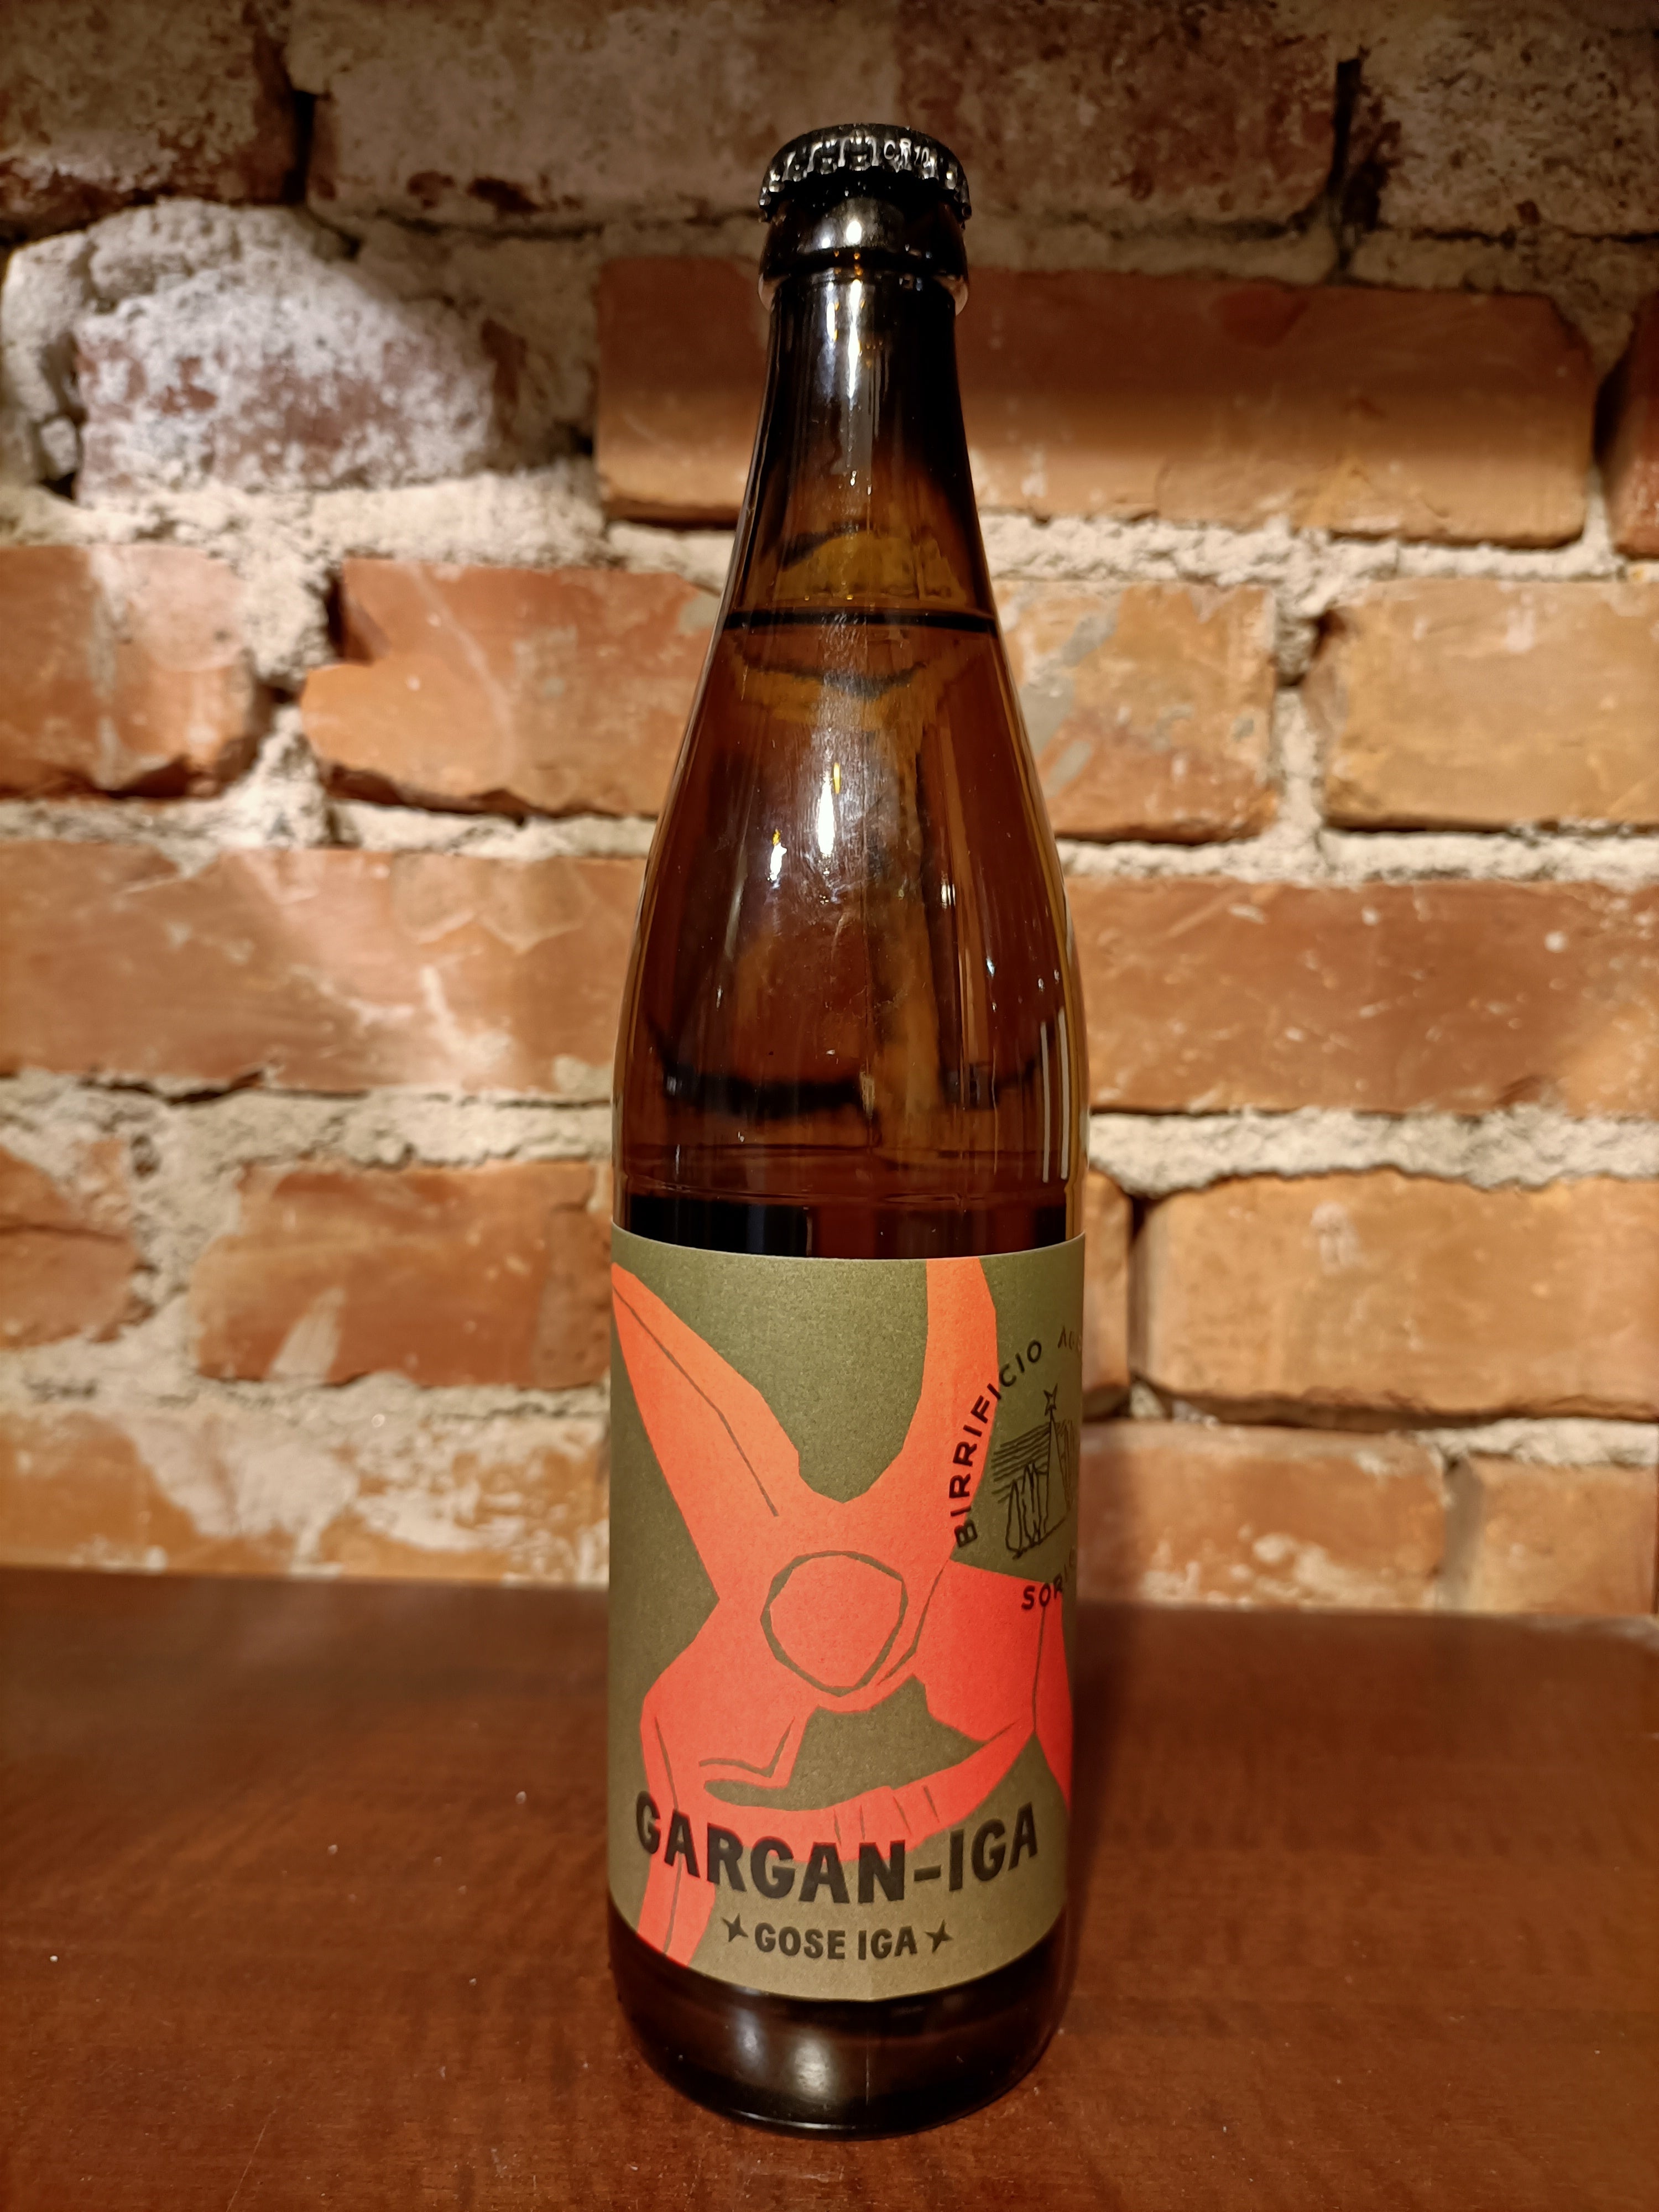 Birra Gargan-Iga Gose Iga di Birrificio Agricolo Sorio – 50 cl